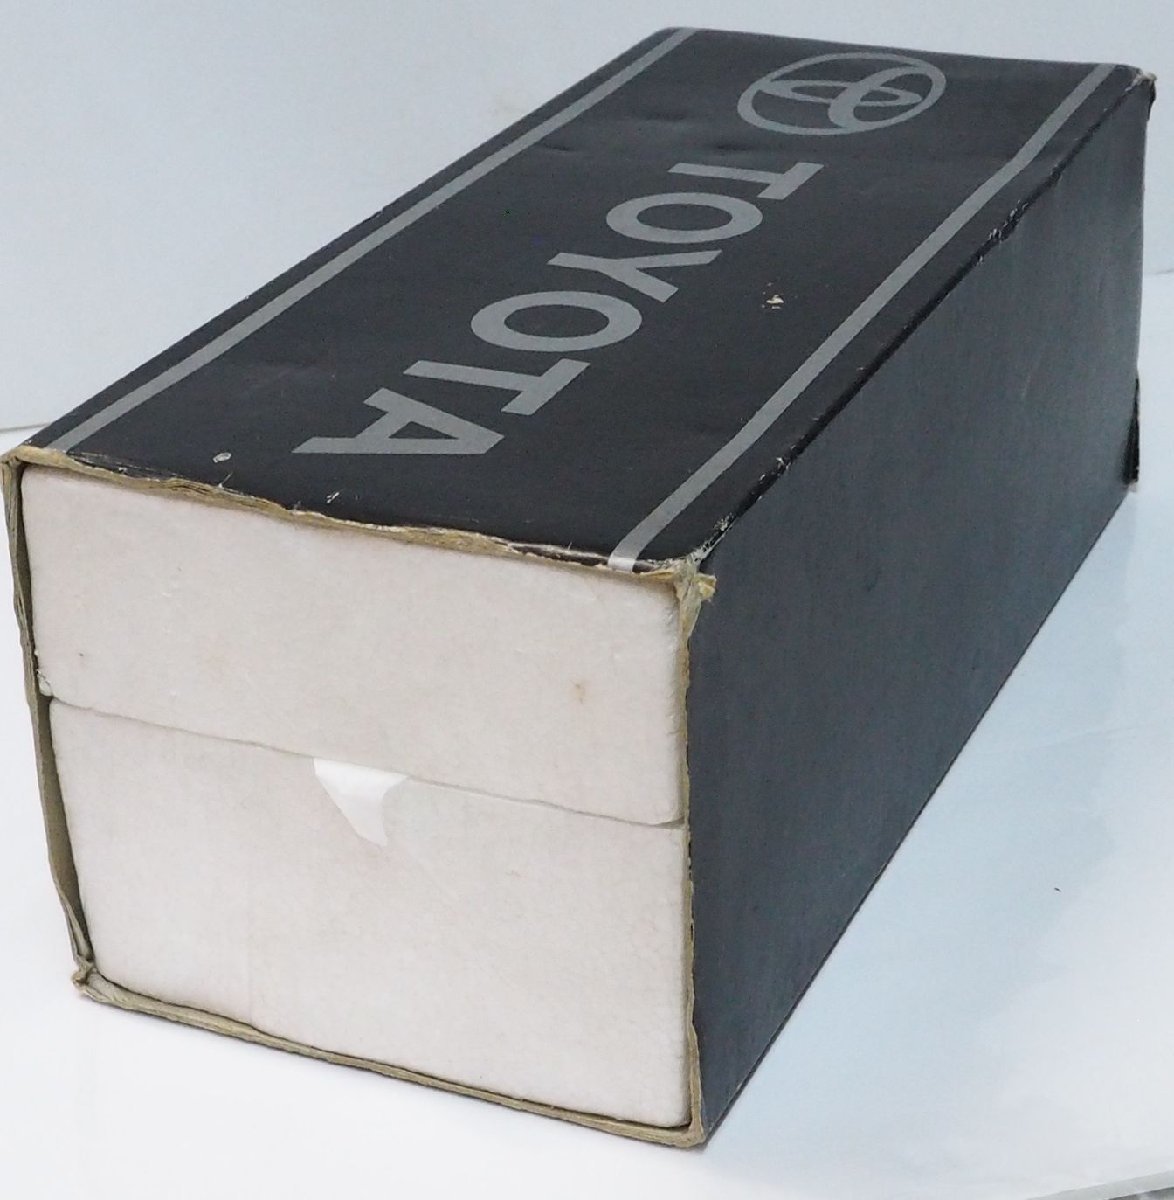  dealer [ Toyota Crown Majesta TOYOTA CROWN MAJESTA C TYPE] cigarette case made of metal cigar case ashtray [ box attaching ]0750